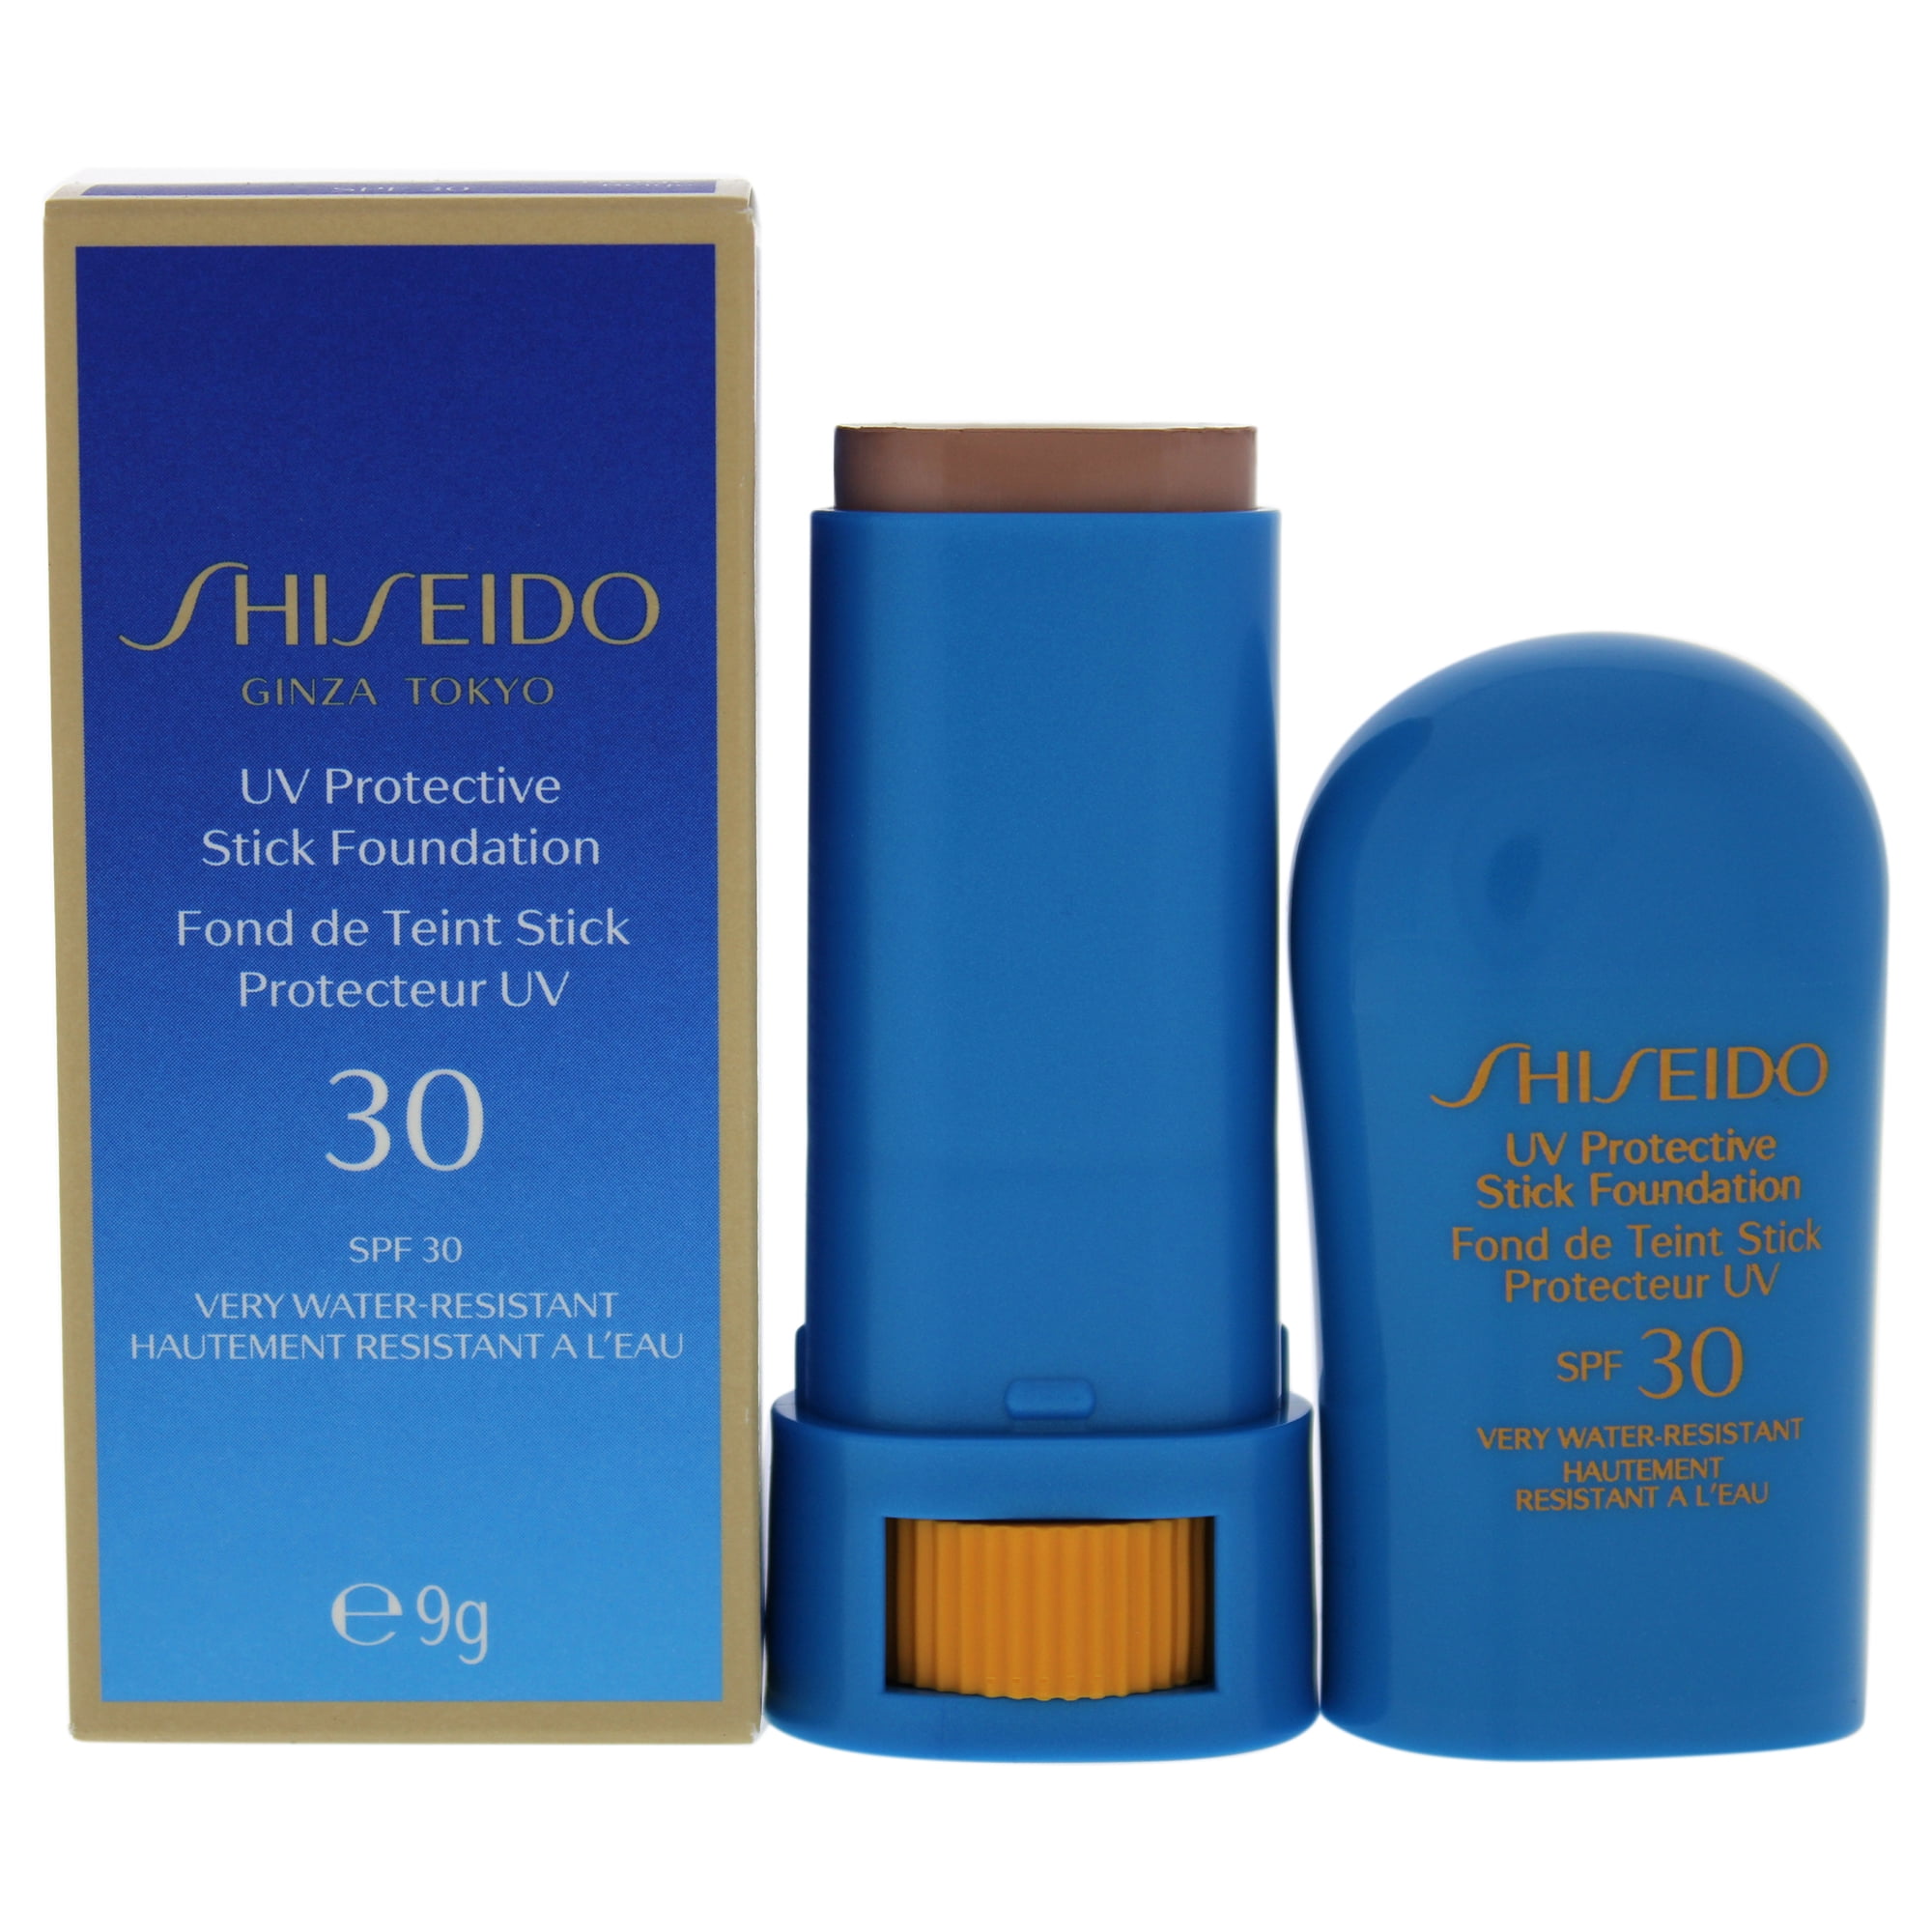 Shiseido SPF. Шисейдо стик СПФ. Шисейдо СПФ 50 отзывы. Shiseido Yane Hake отзыв. Shiseido spf 30